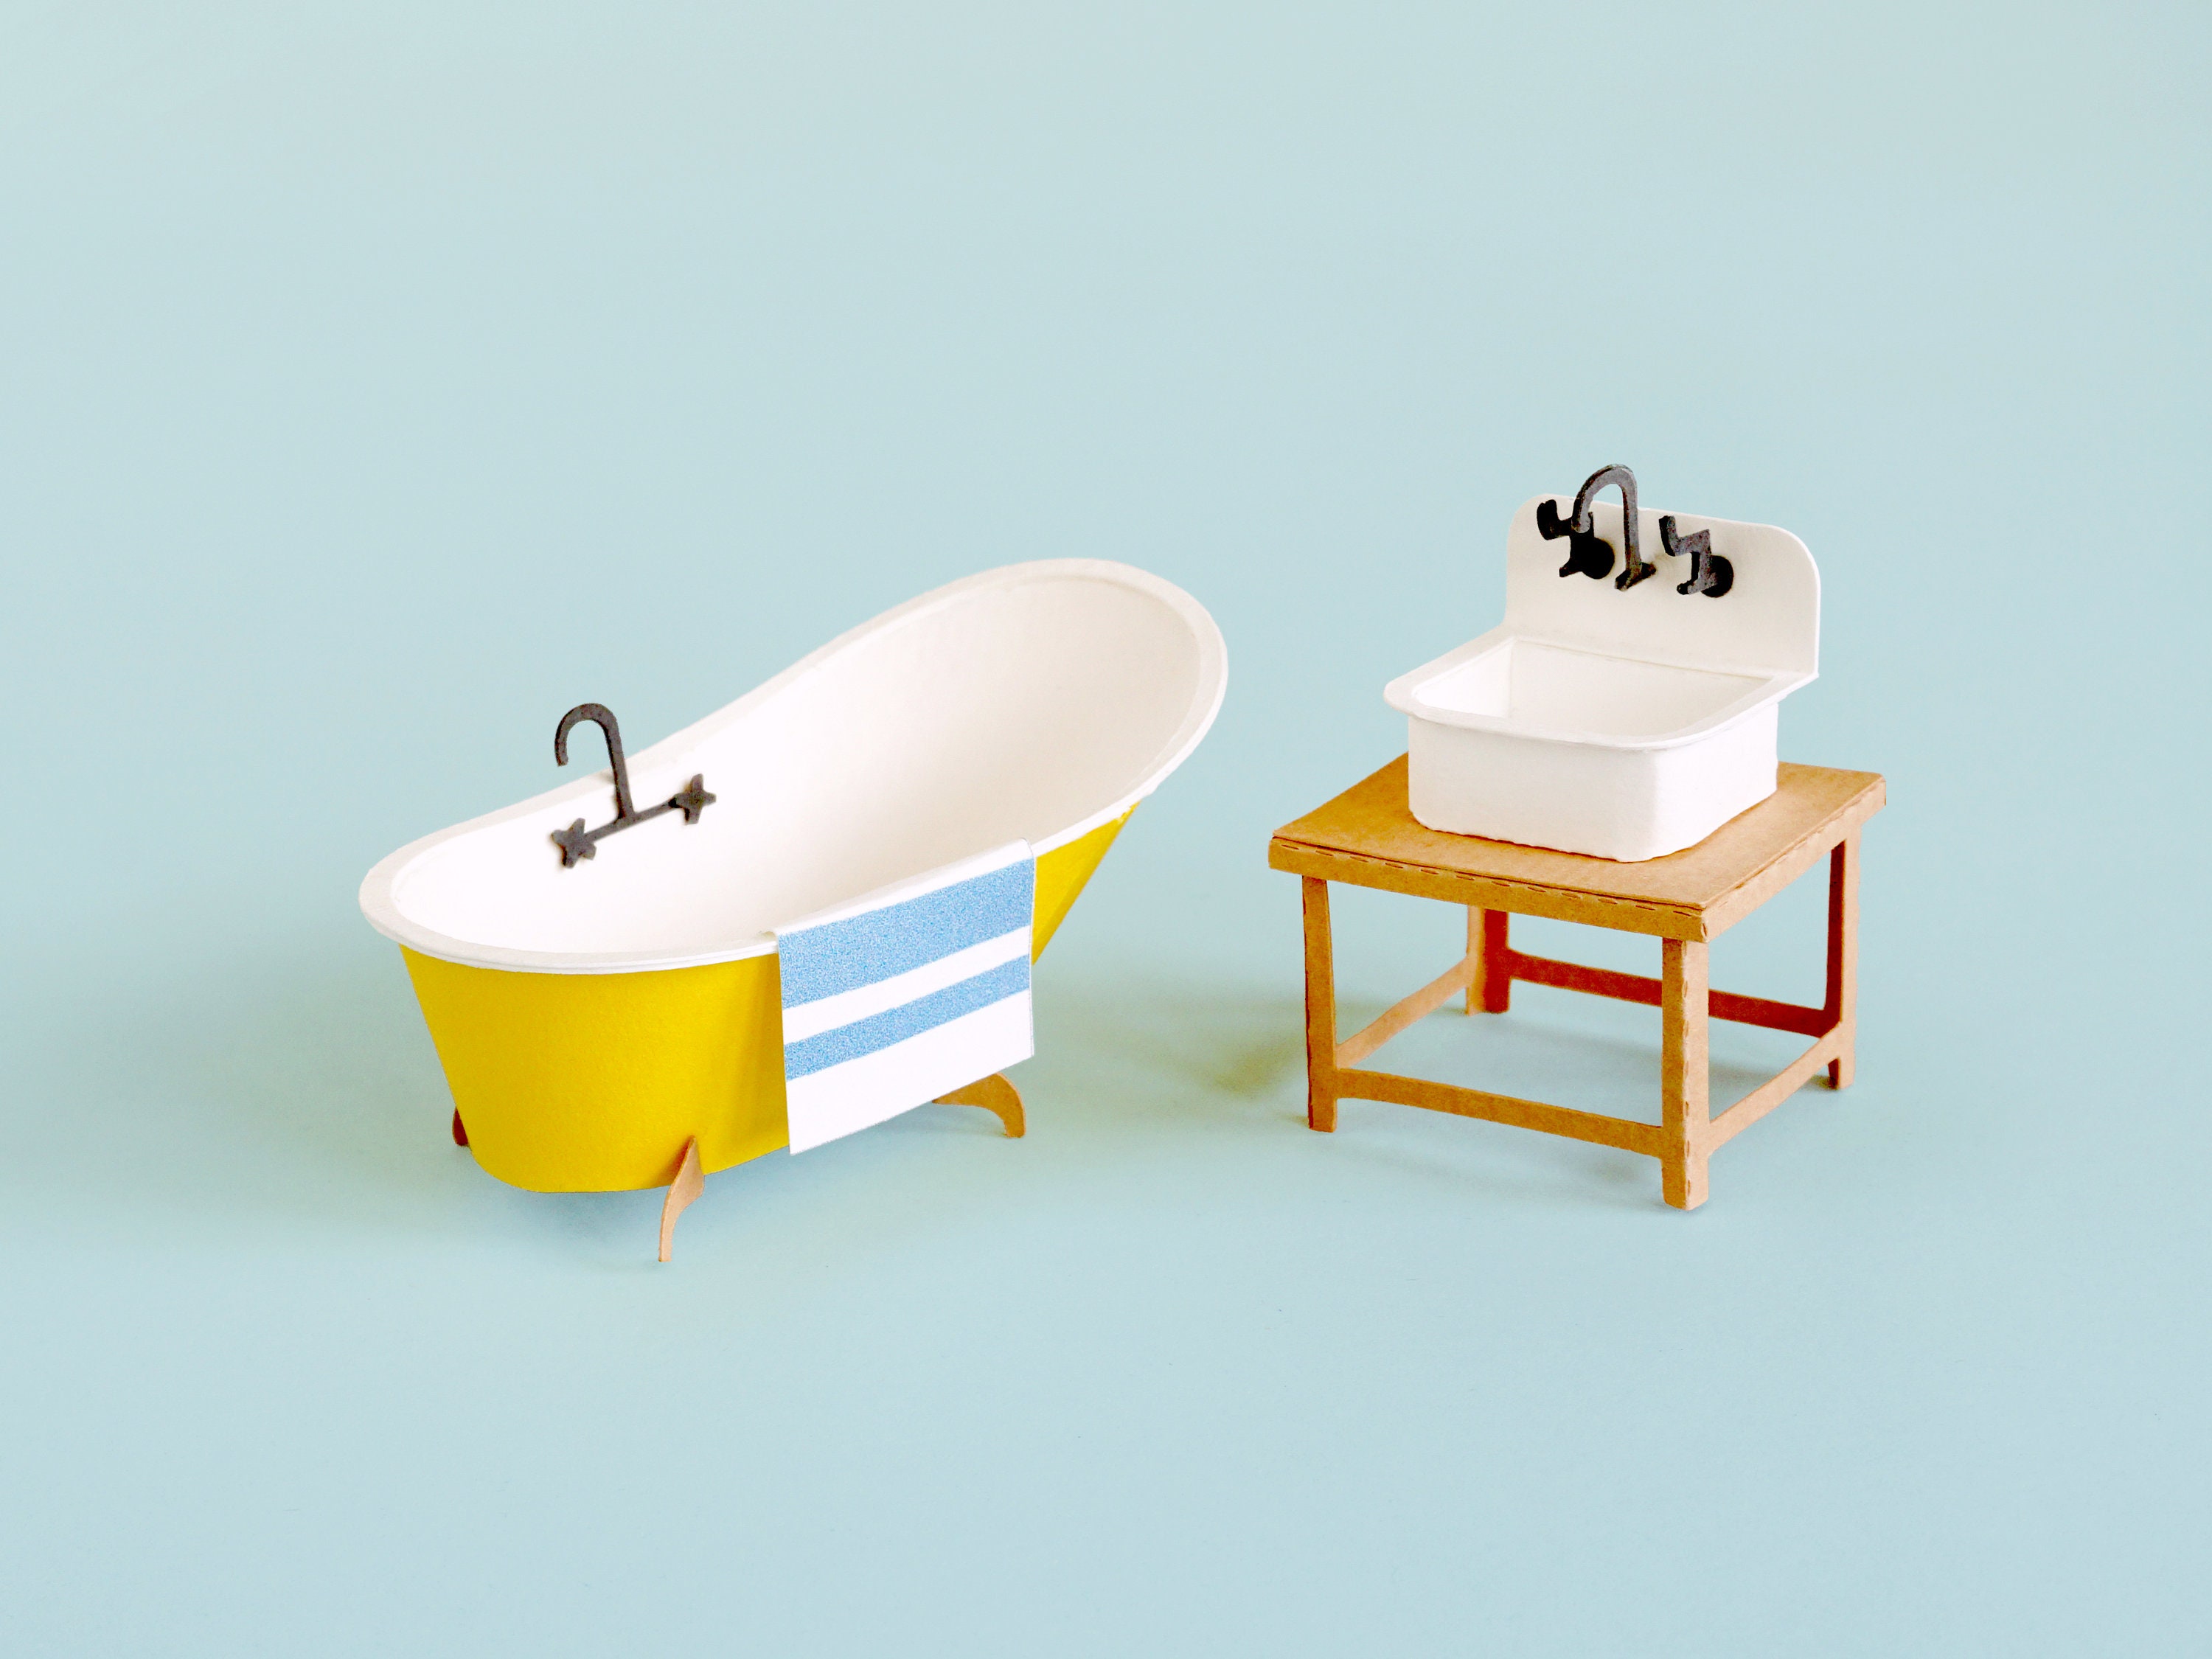 Decorative Mini Bathtub TP-582